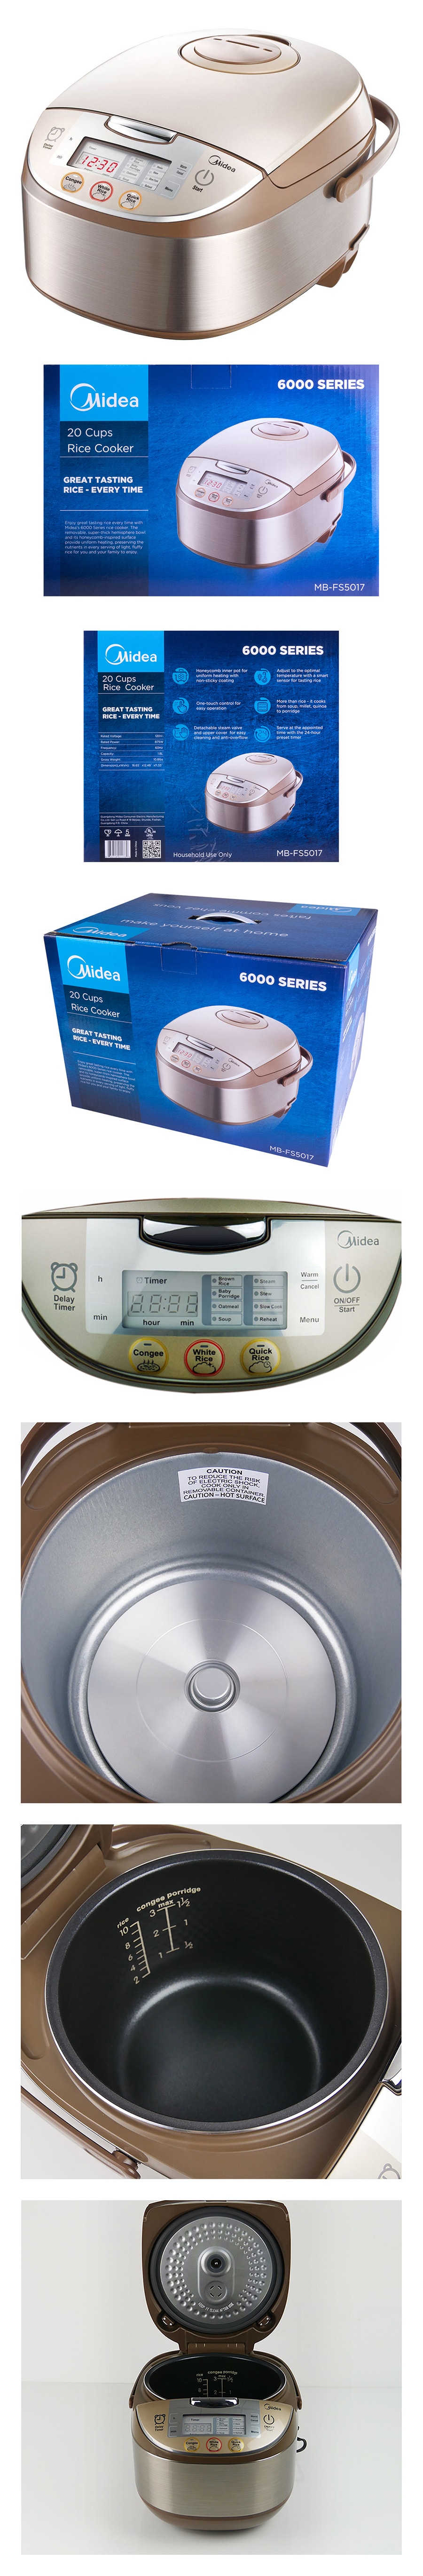 midea mb-fc4020 rice cooker instructions